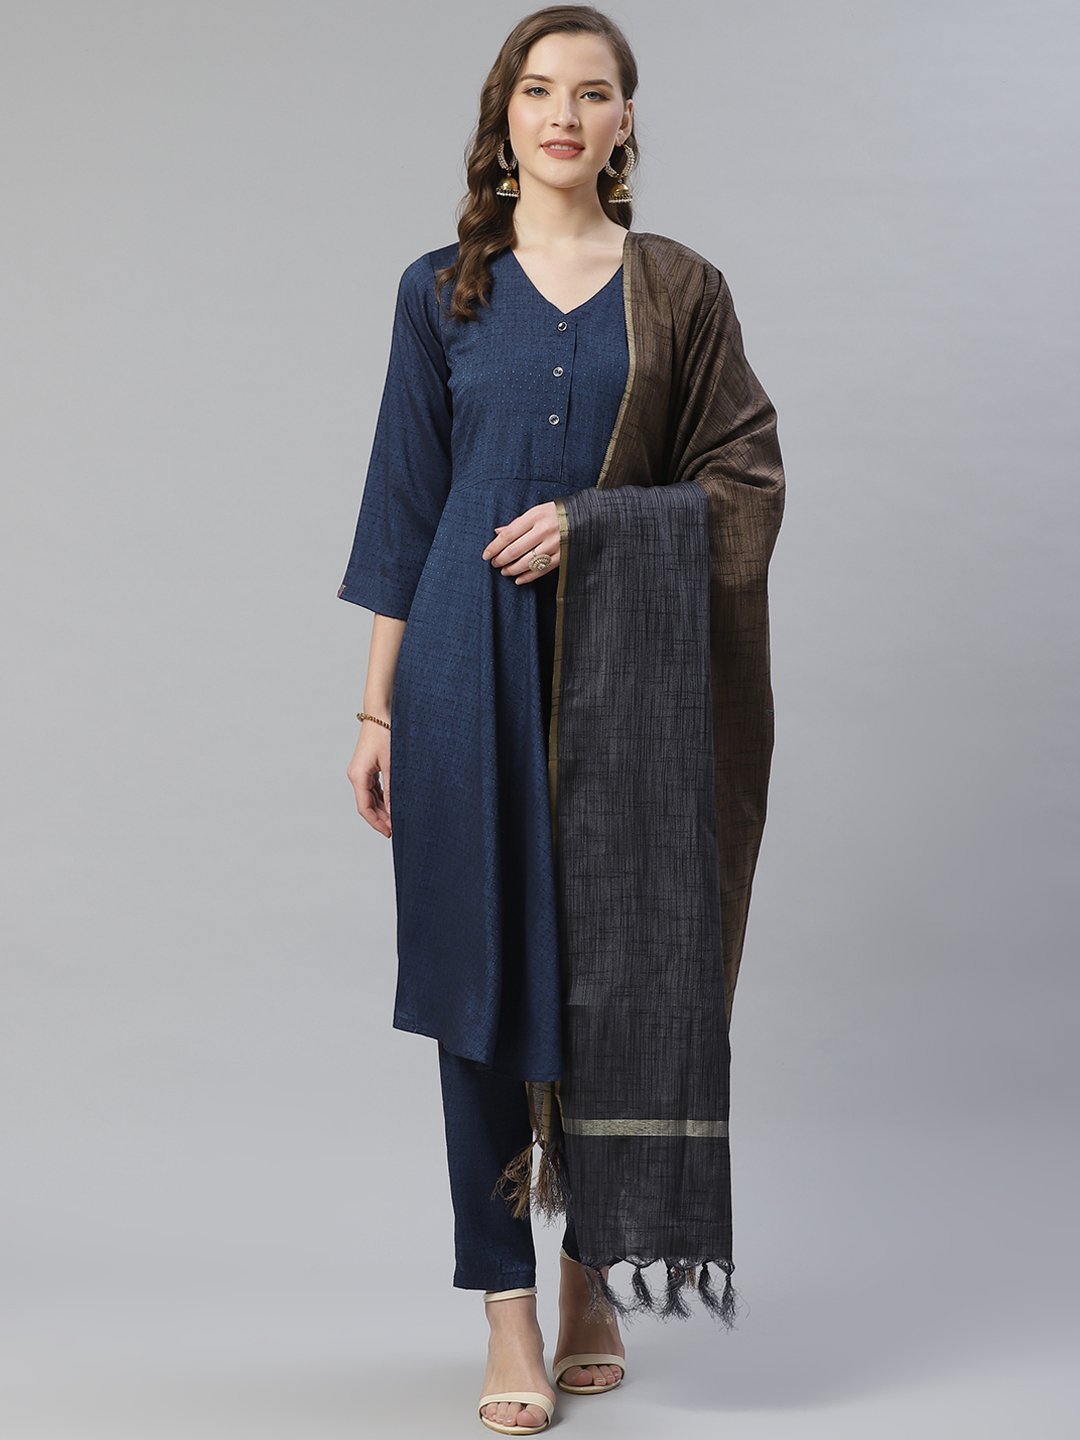 Women's Navy Blue & Charcoal Grey Self Design Kurta with Trousers & Dupatta - Jompers